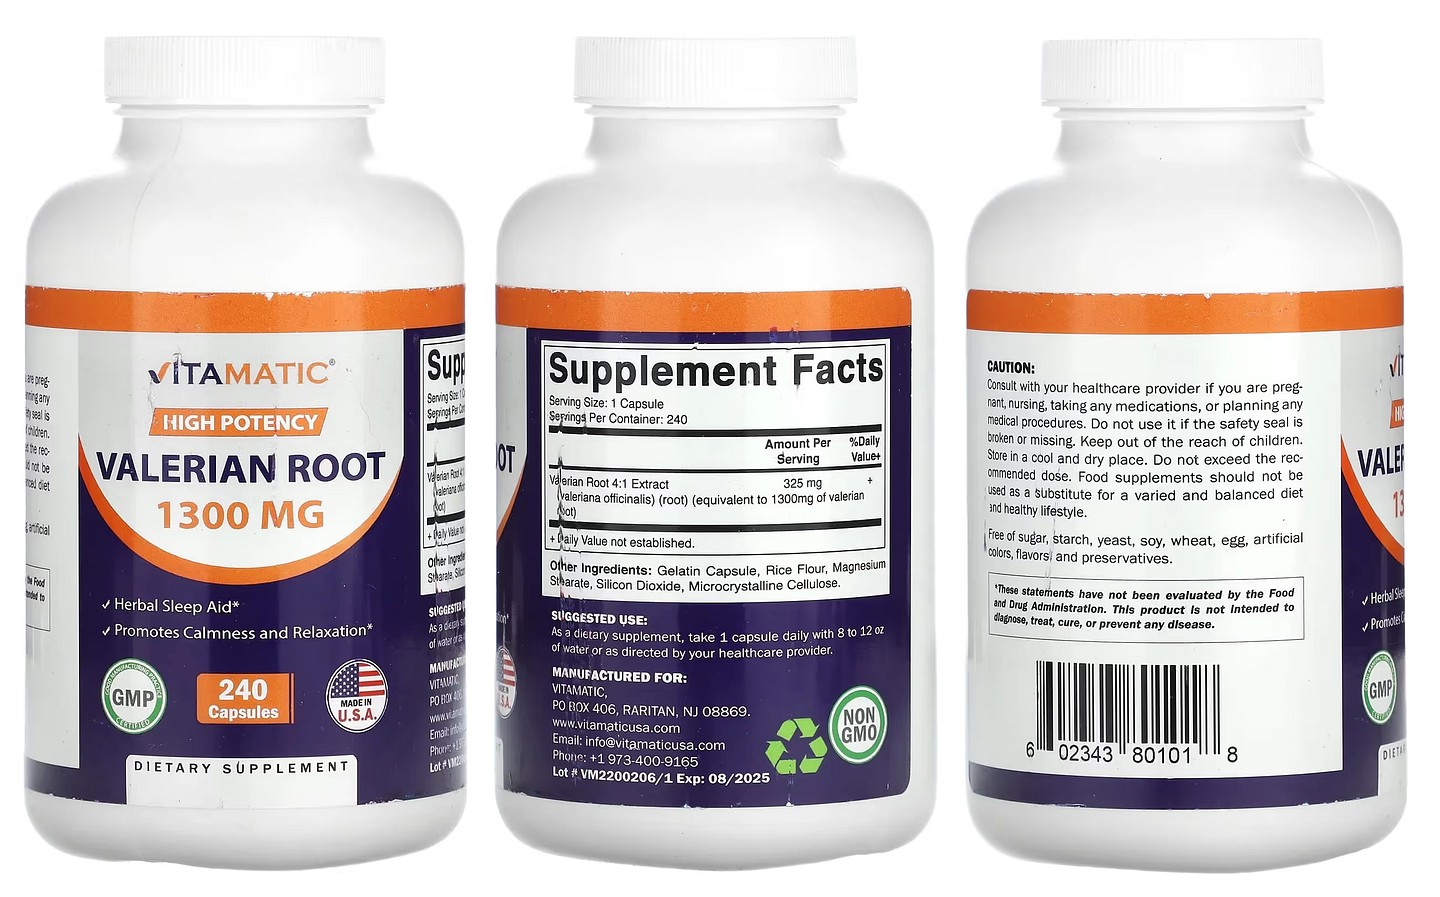 Vitamatic, Valerian Root packaging